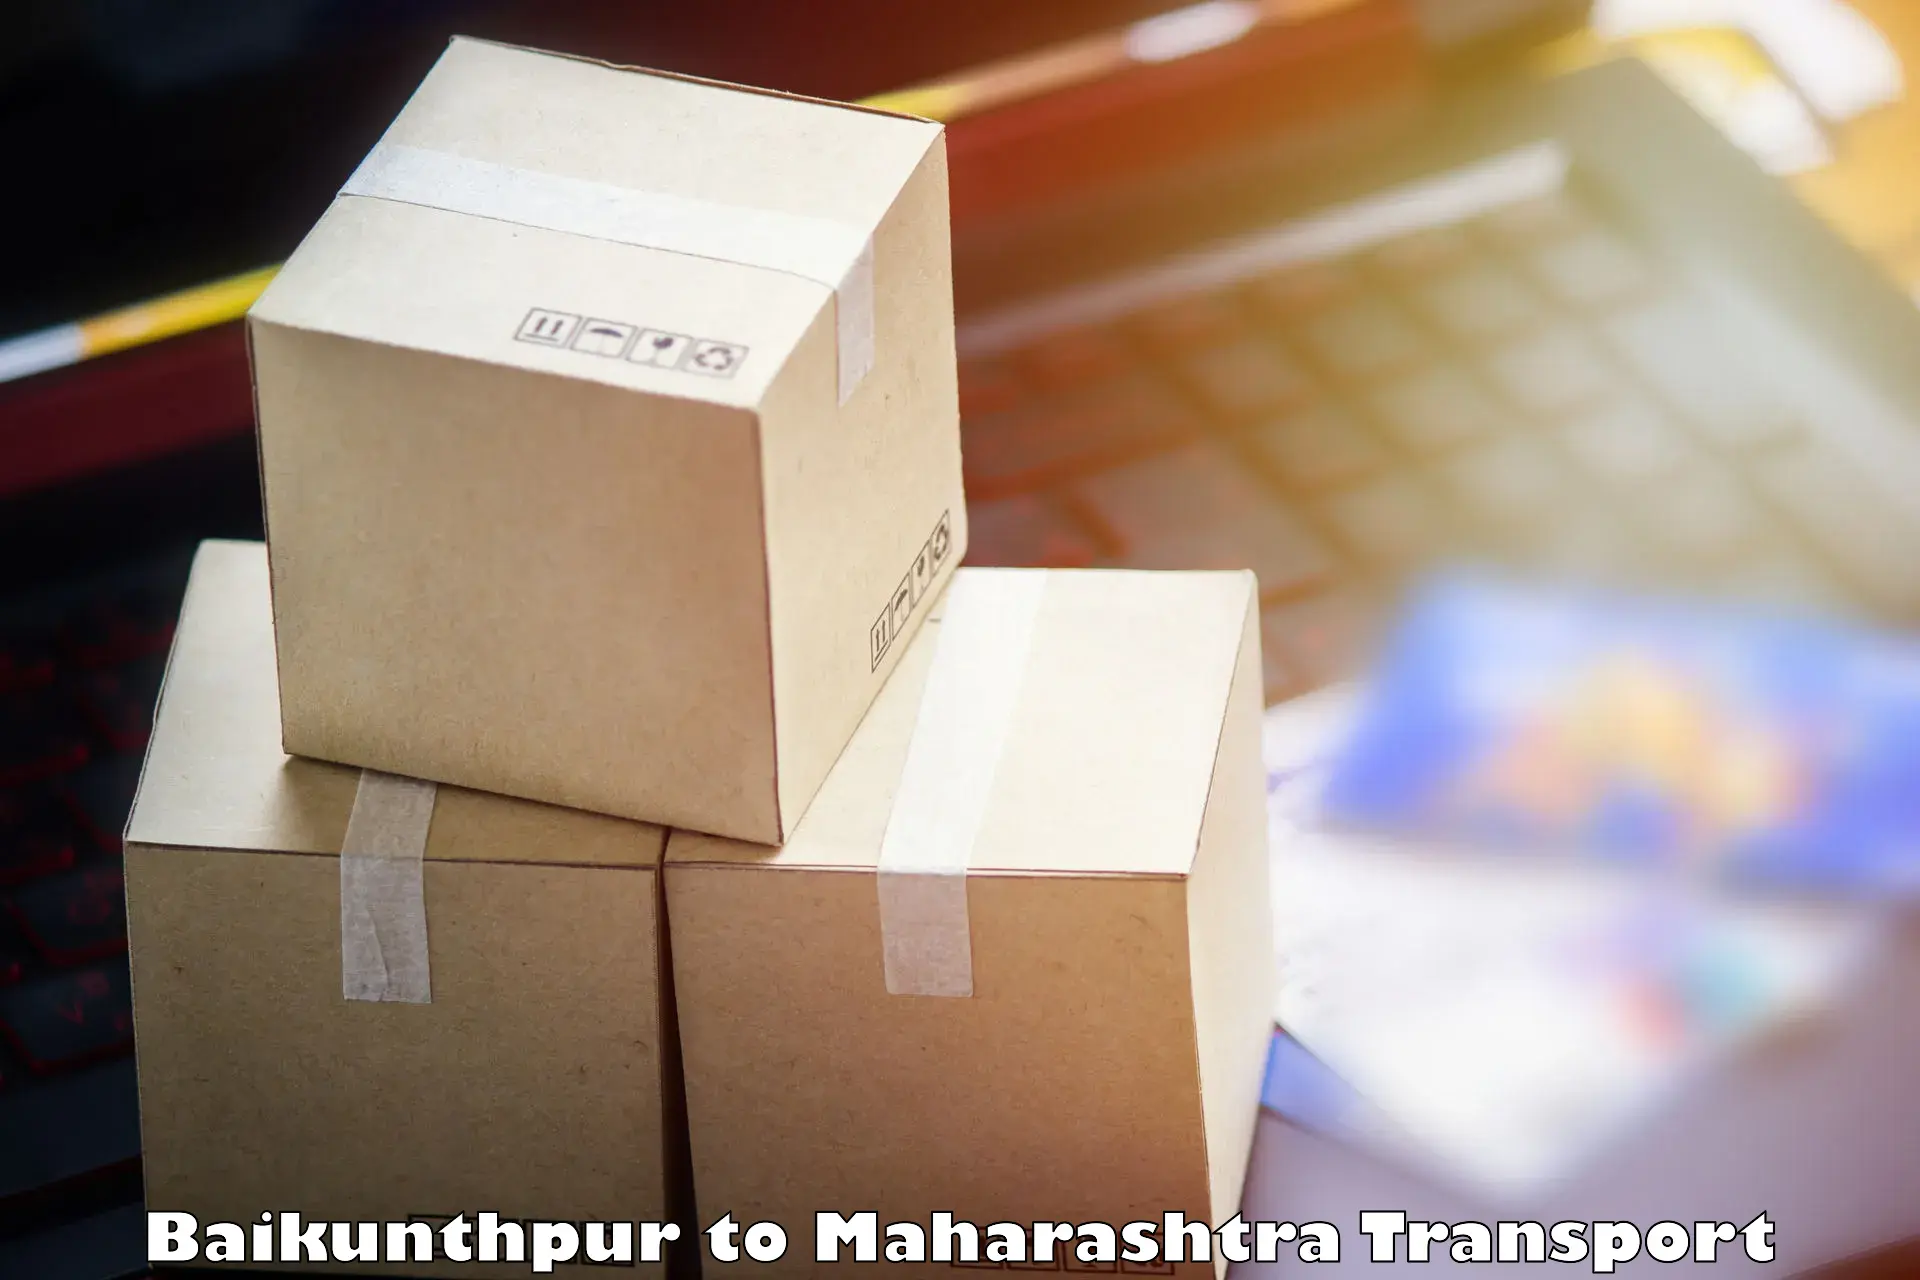 Pick up transport service Baikunthpur to Lonere